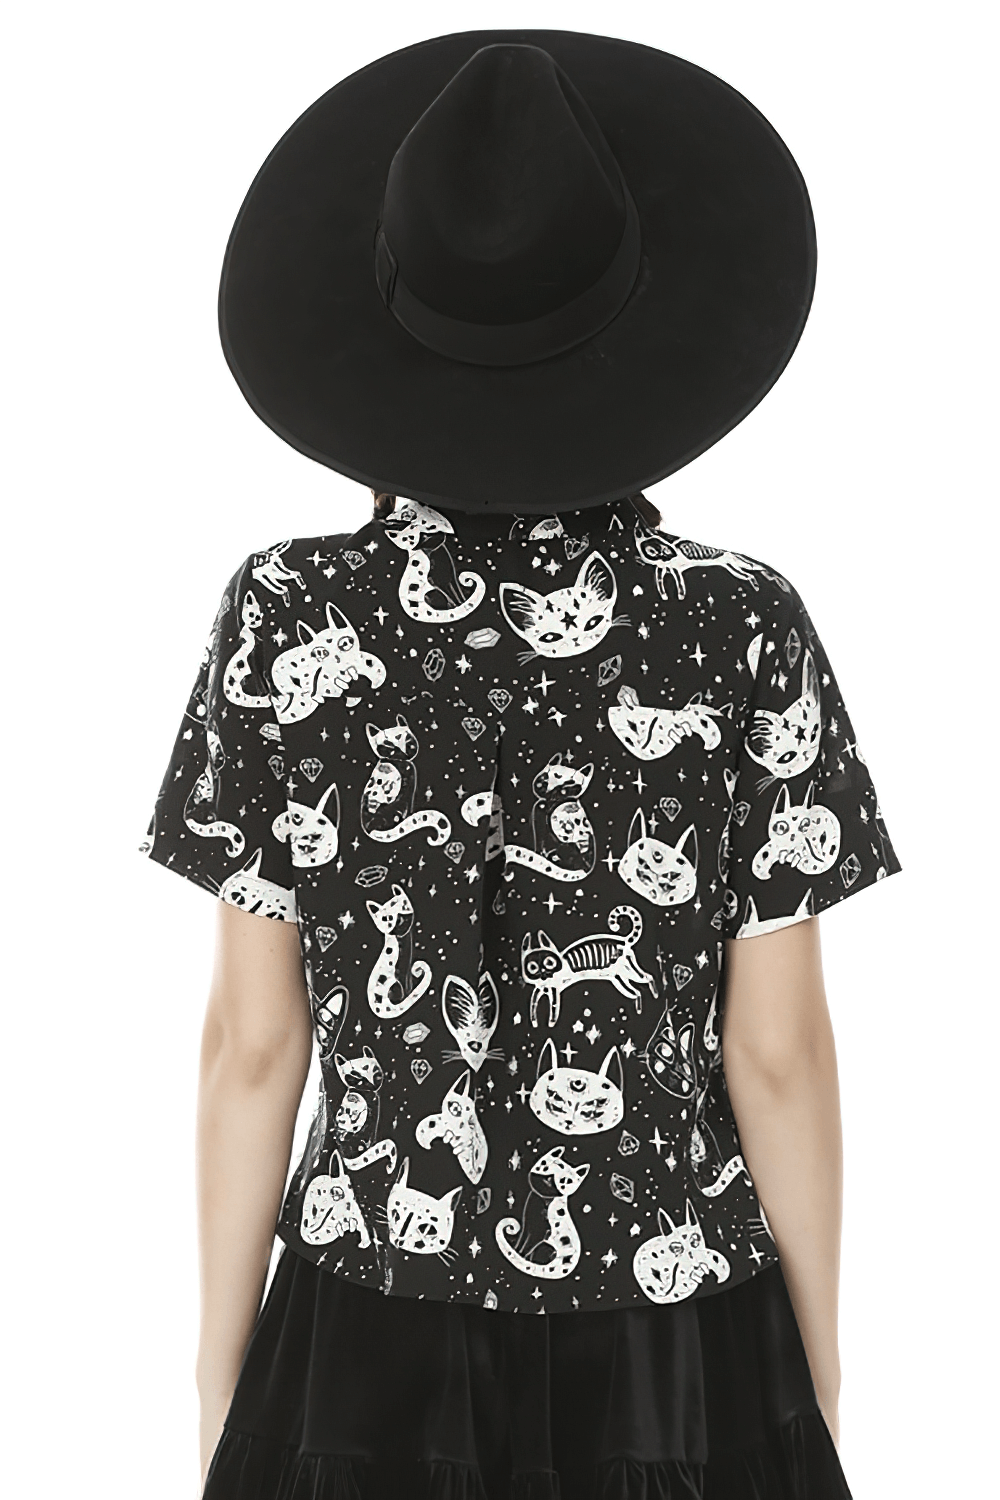 Stylish Black and White Cat Print Gothic Punk Shirt